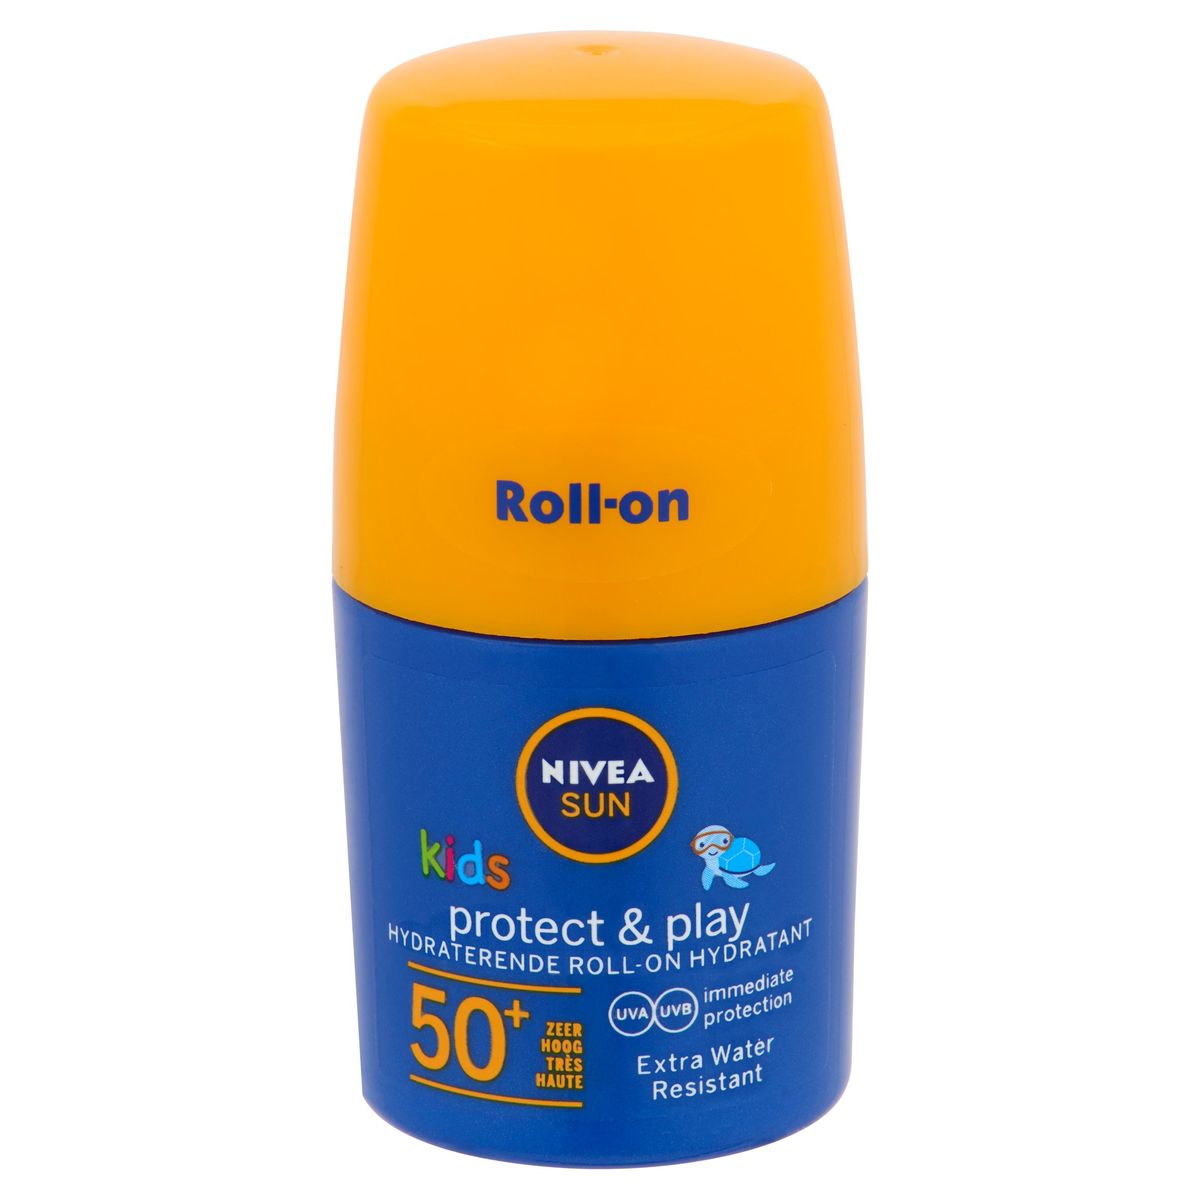 Nivea Sun Kids Protect & Play Roll-On Hydratant 50+ Très Haute 50 ml